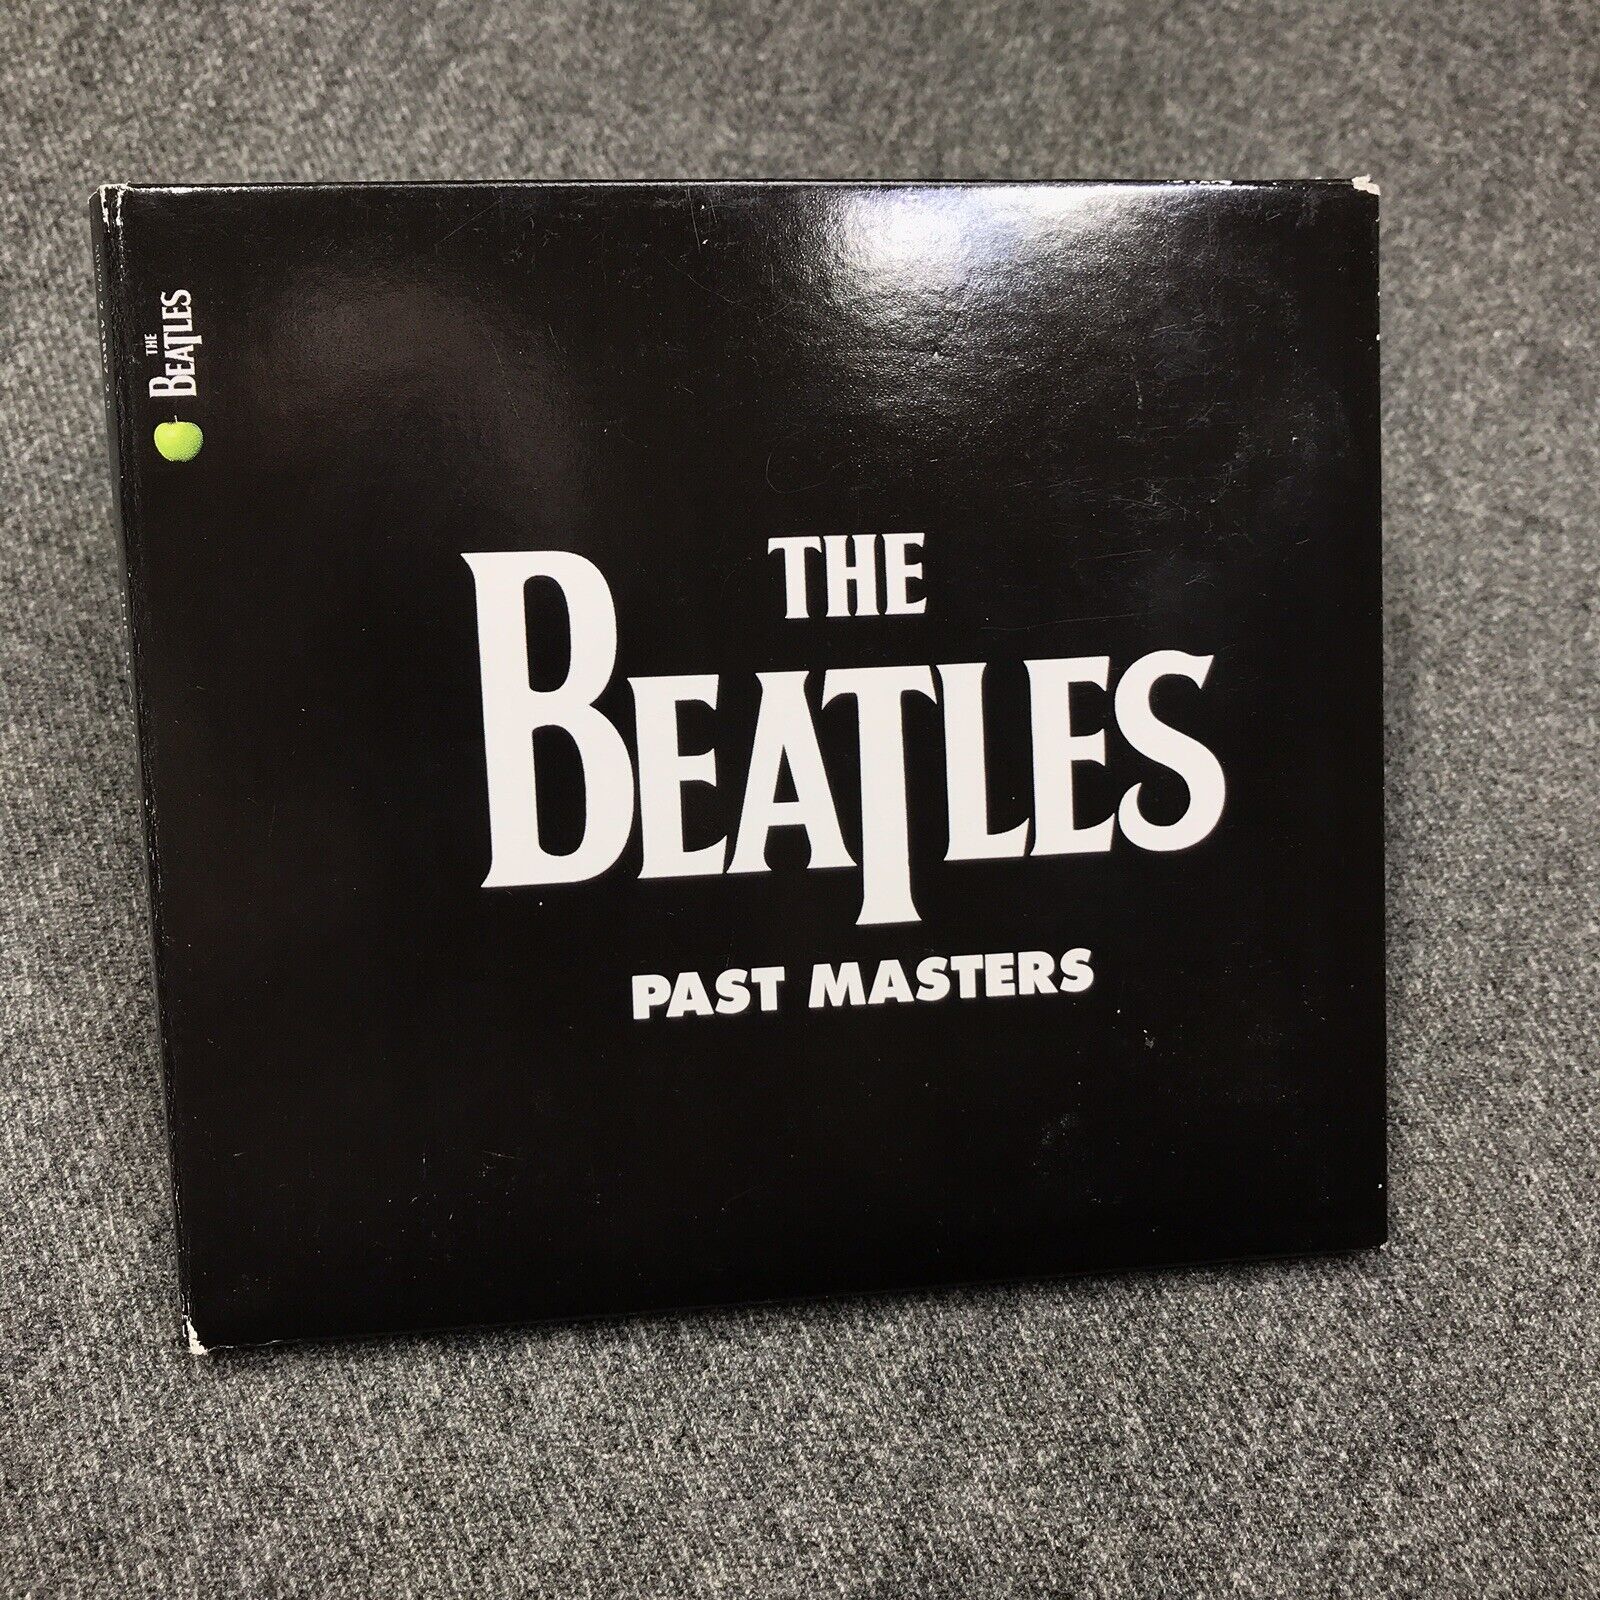 The Beatles Past Masters CD 2009 - 2 CD Digipak Apple Paul McCartney John Lennon